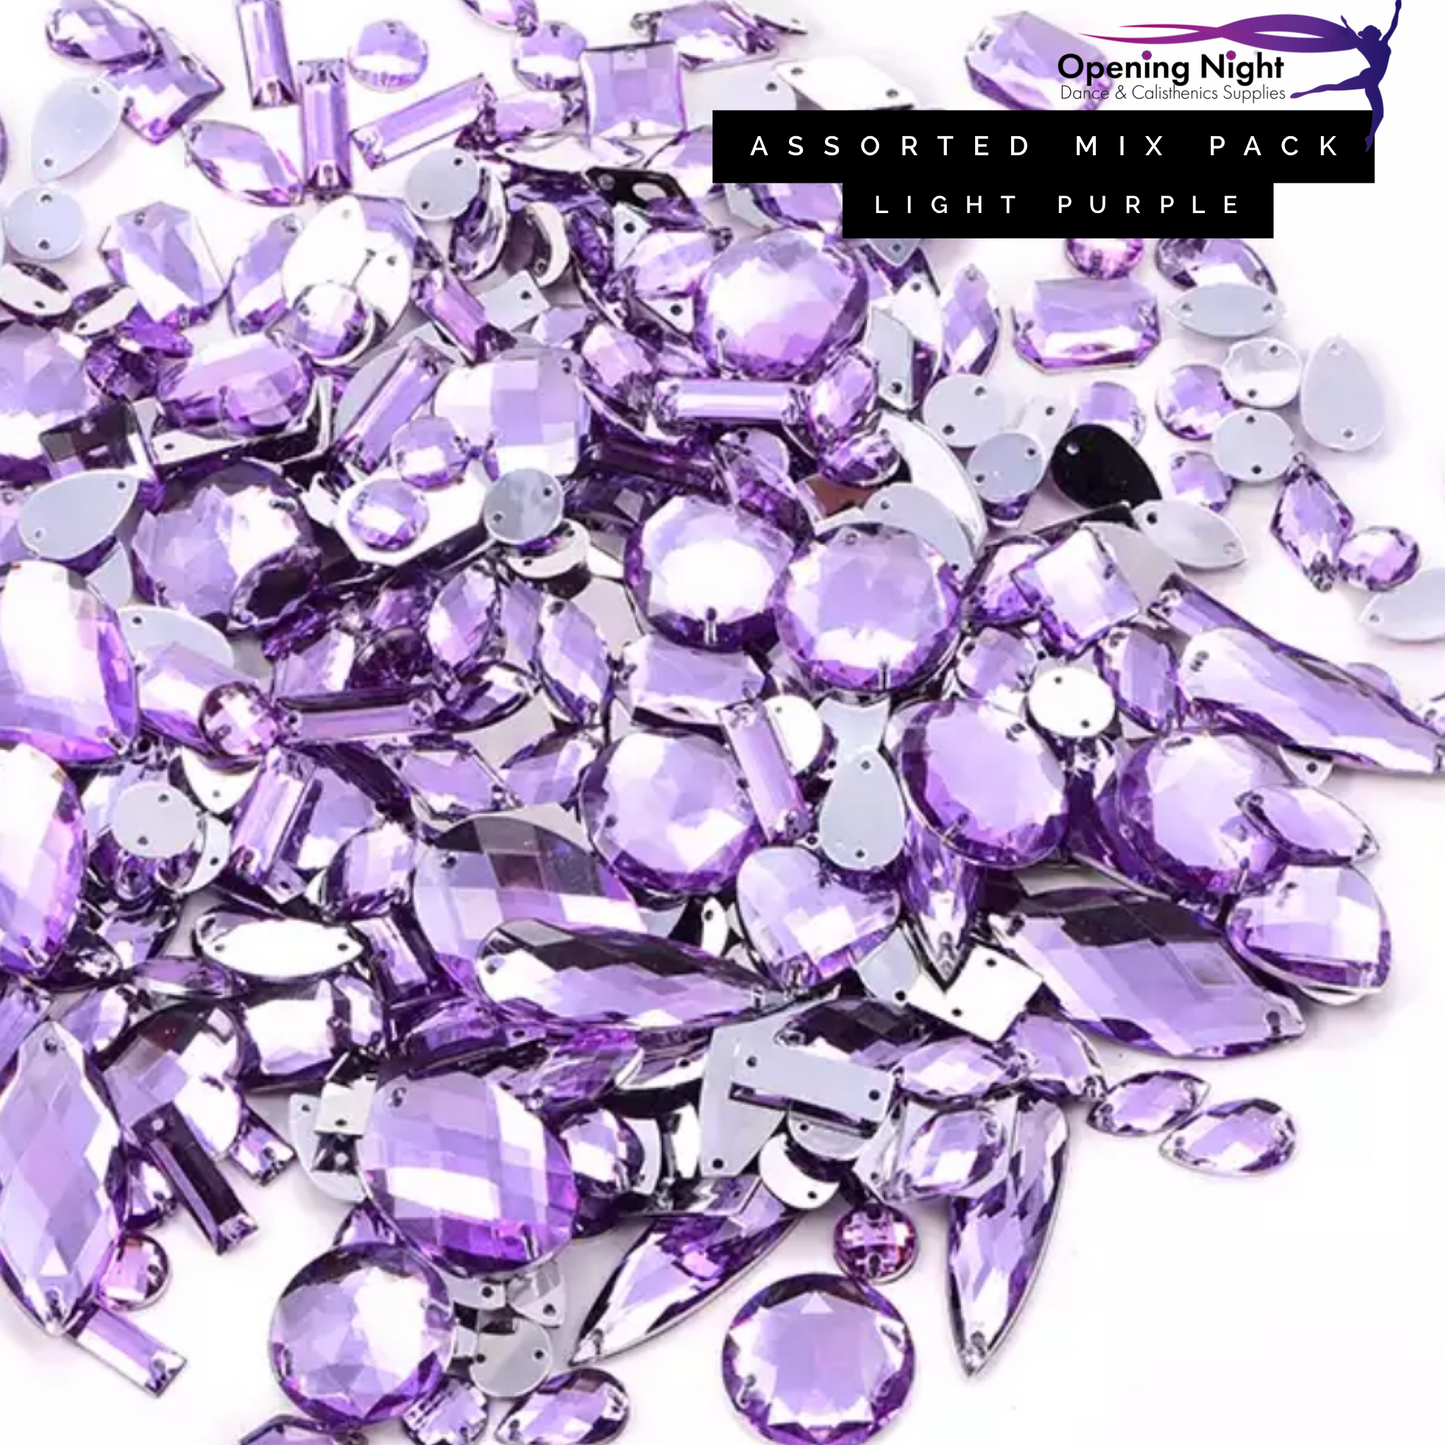 Assorted Mix Pack - Light Purple